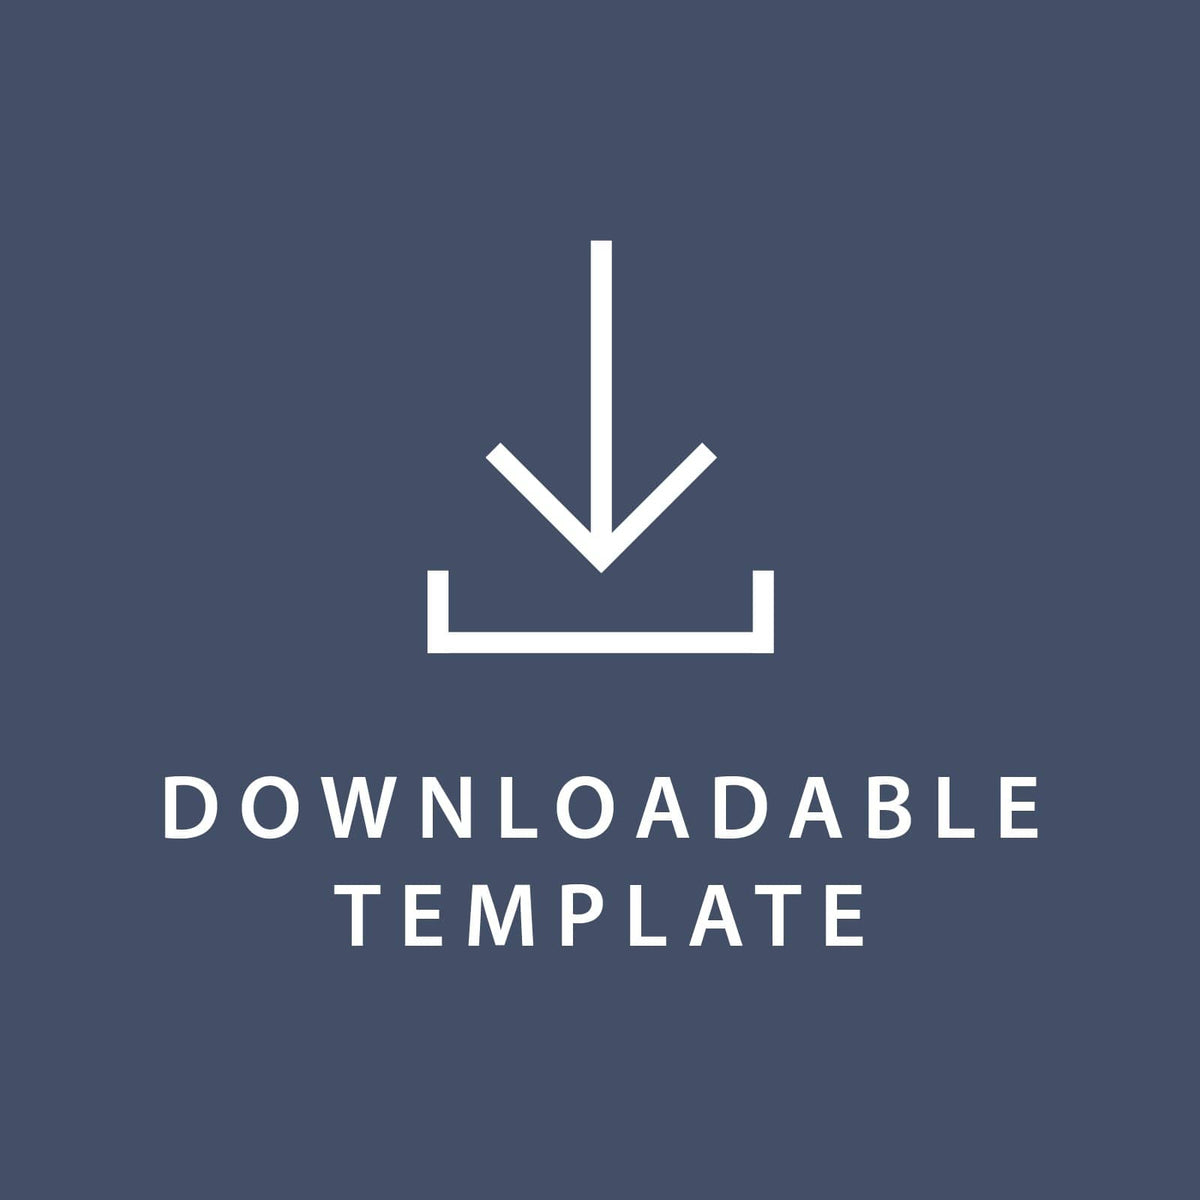 Template for 8 x 5 Certificates Gartner Studios Template tmplt0673